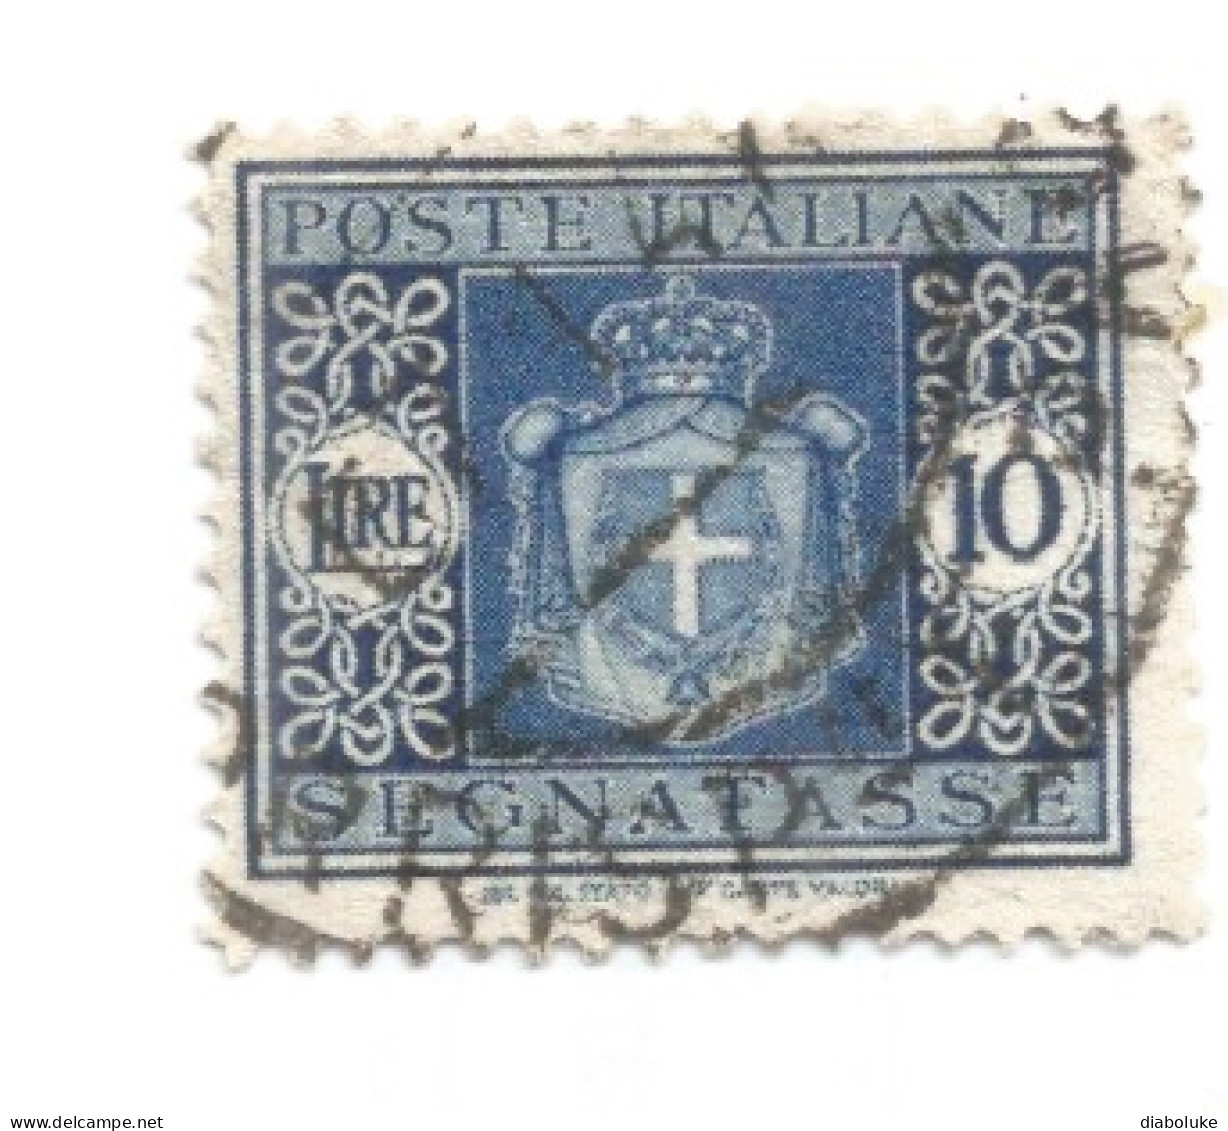 (REGNO D'ITALIA) 1945, SEGNATASSE, STEMMA SENZA FASCI - 8 francobolli usati